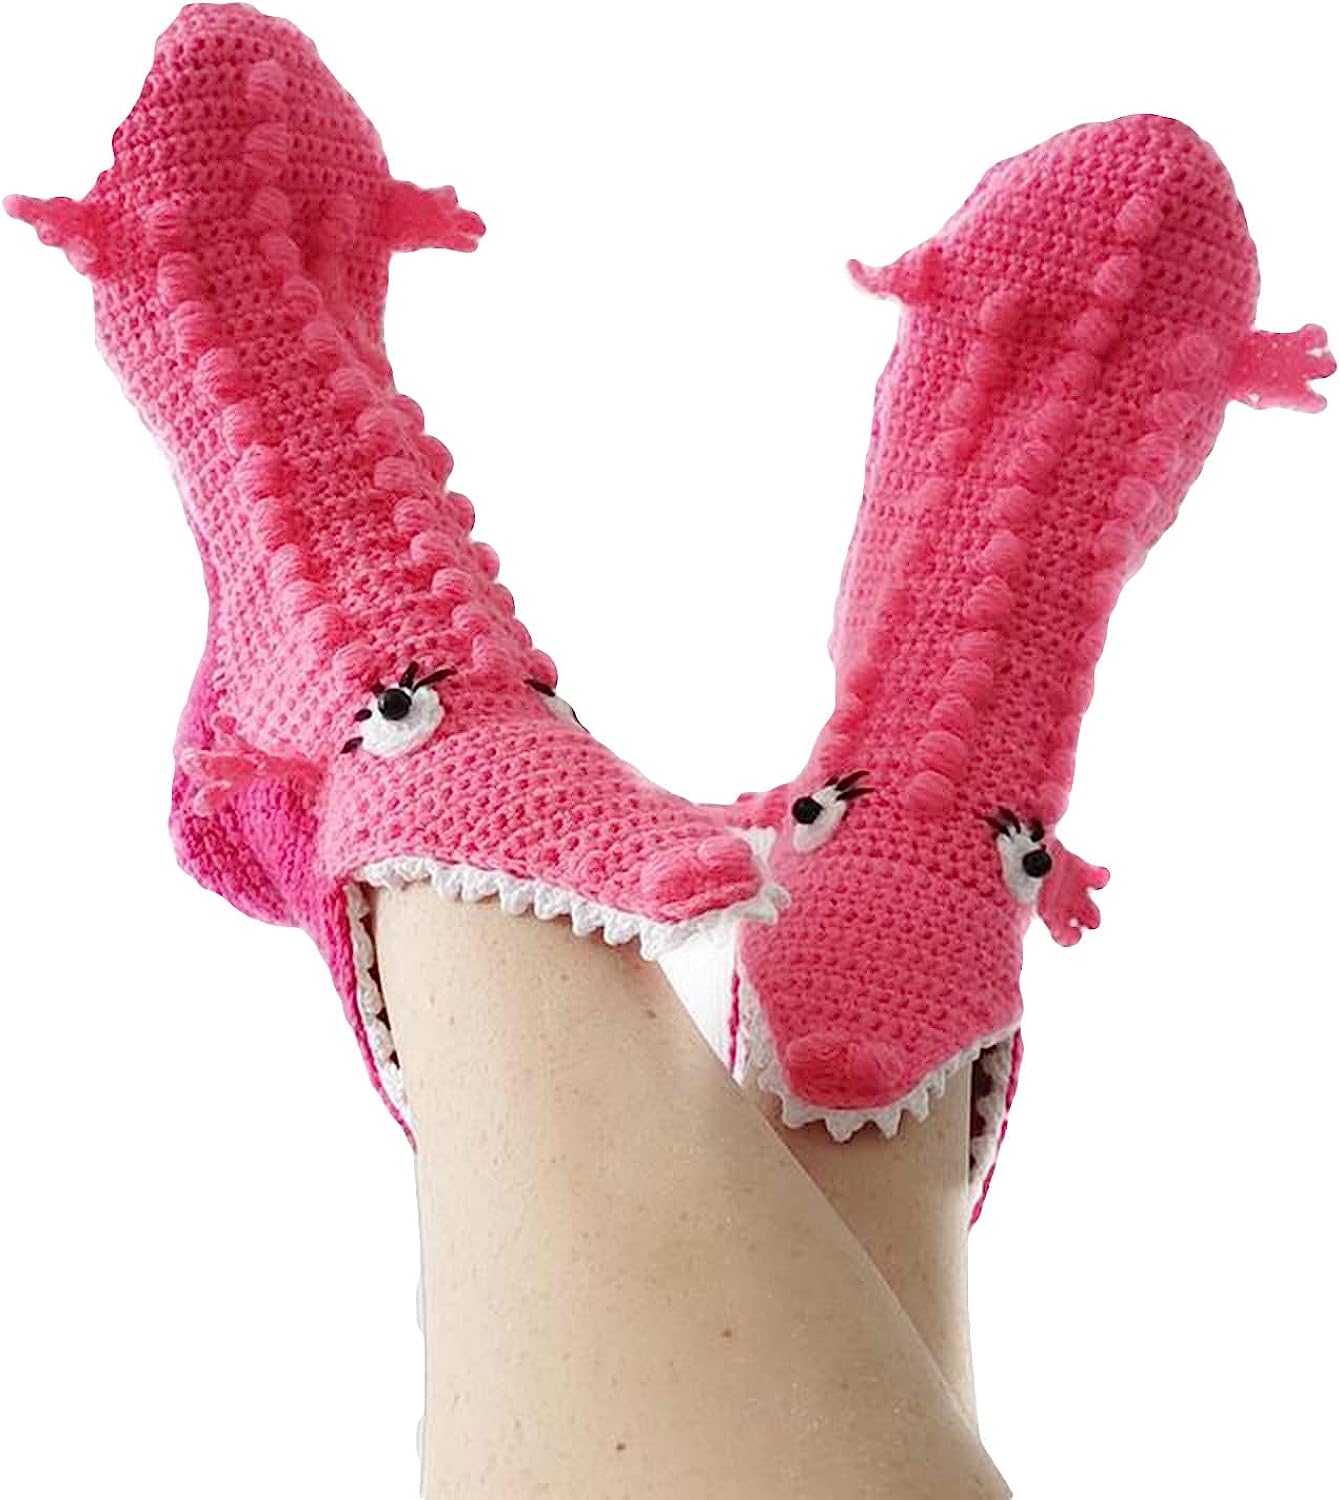 THATLILSHOP One Size / Crocodile Pink Women Men Novelty Animal Pattern Socks Crazy Funny Knit Crocodile Socks Funny Gifts